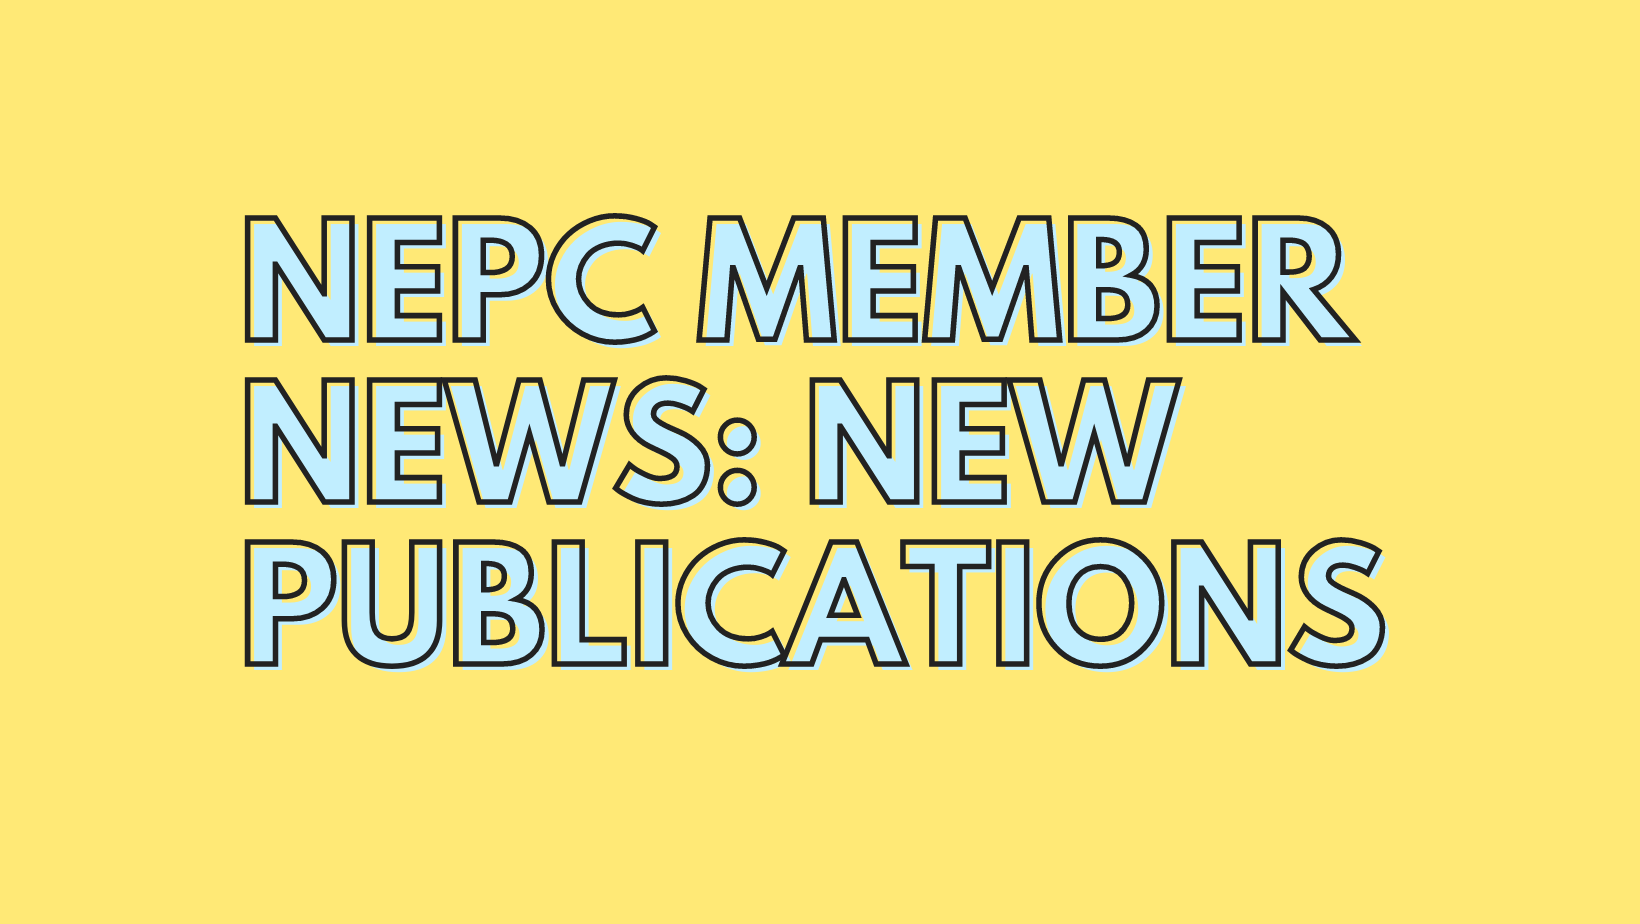 Member Publication News for July 2022